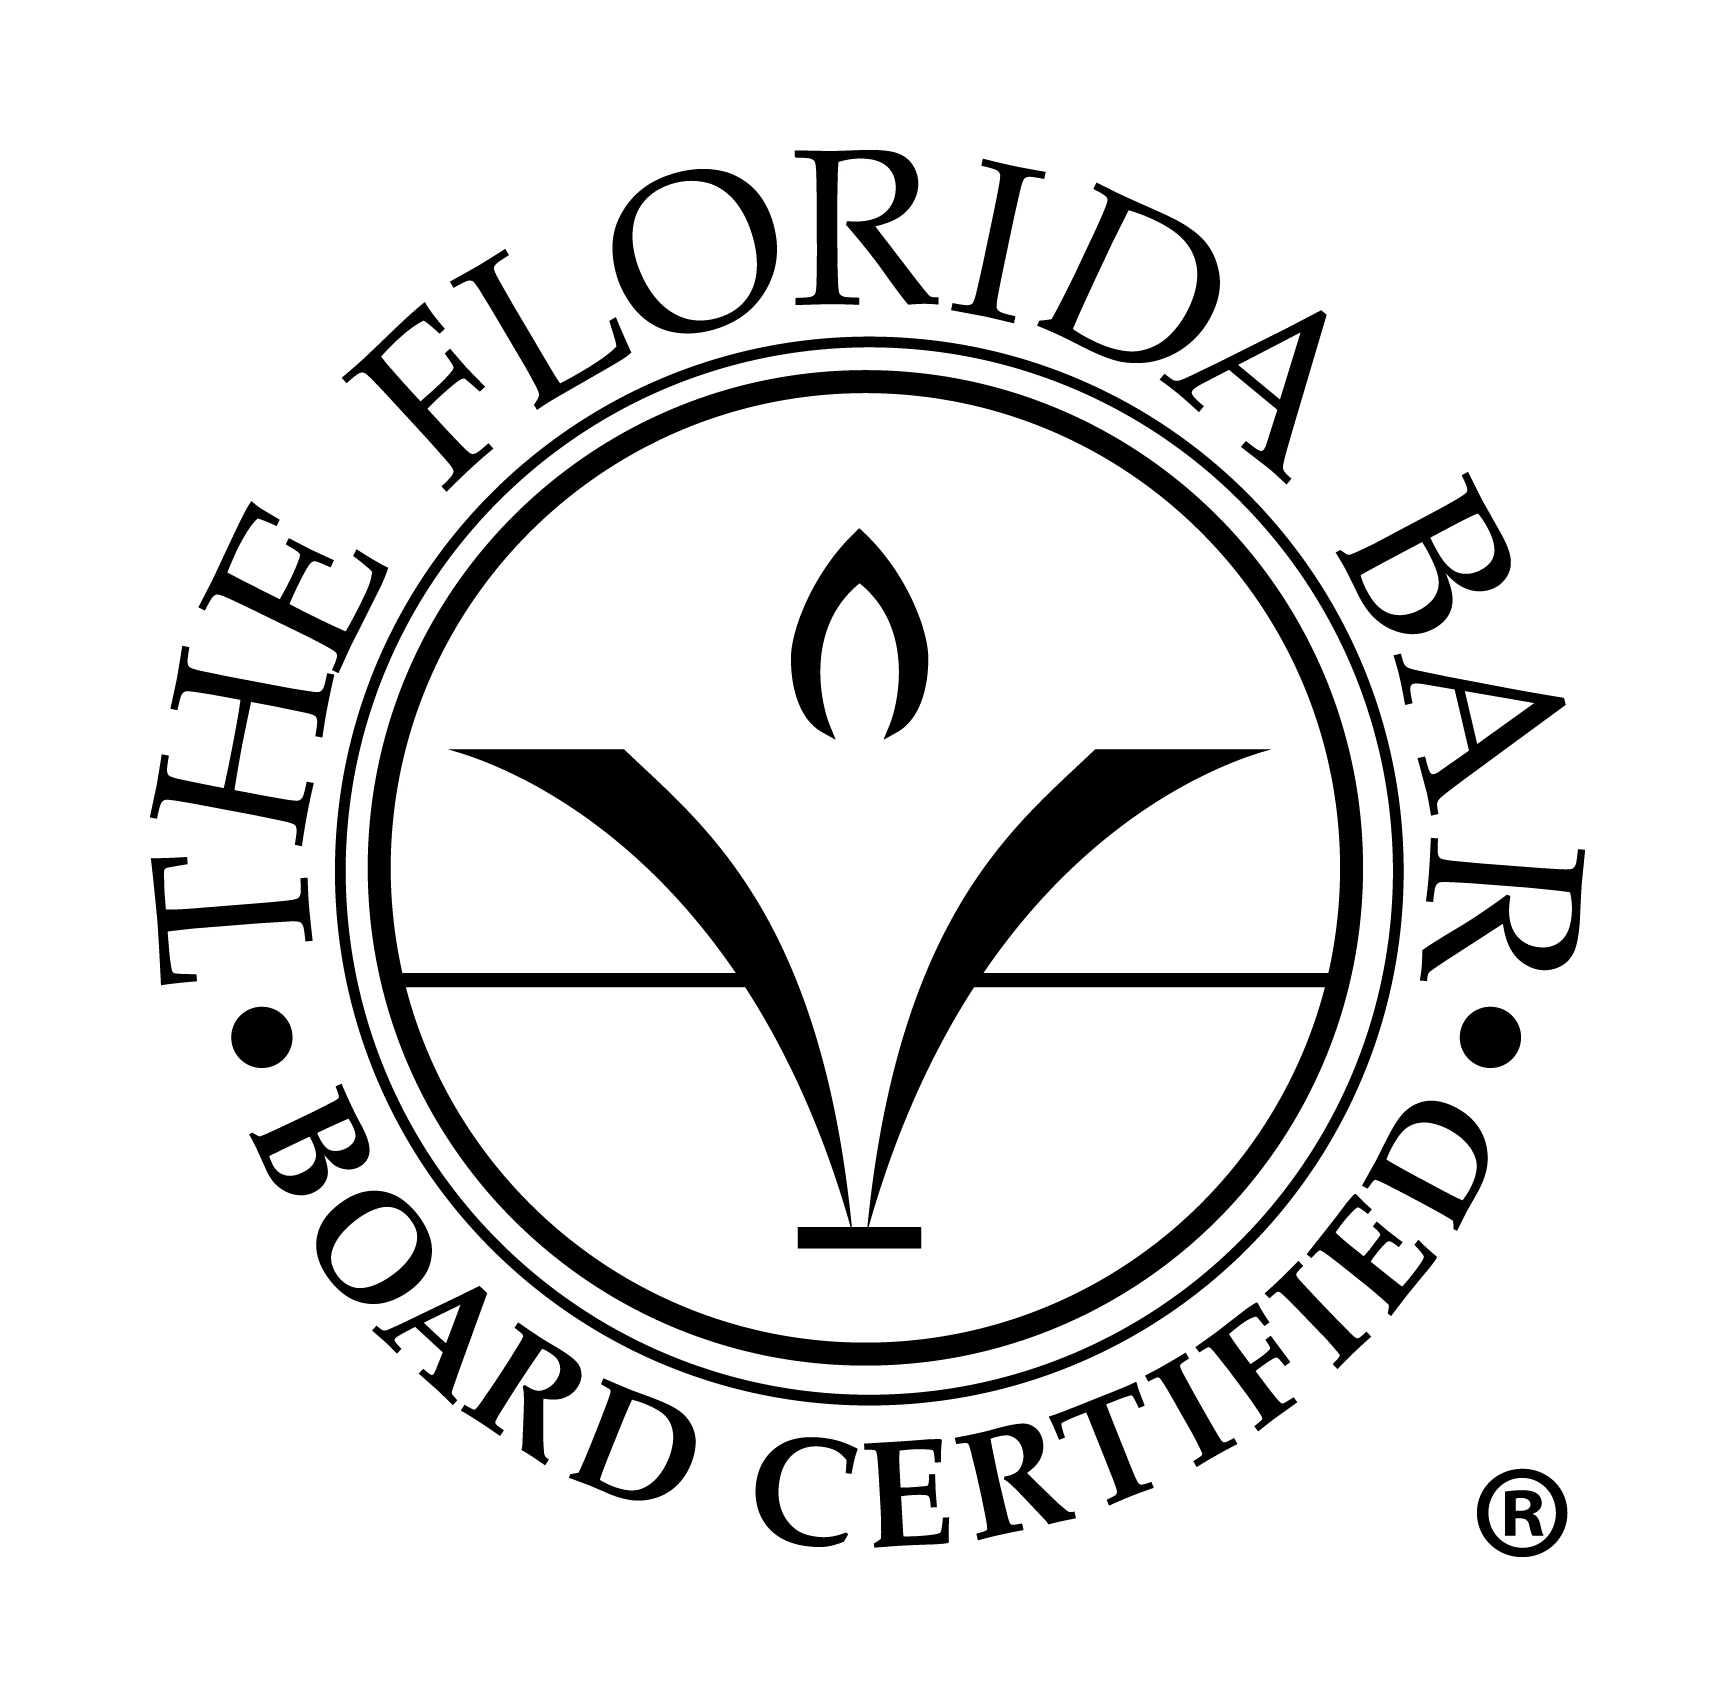 The florida bar bord certified